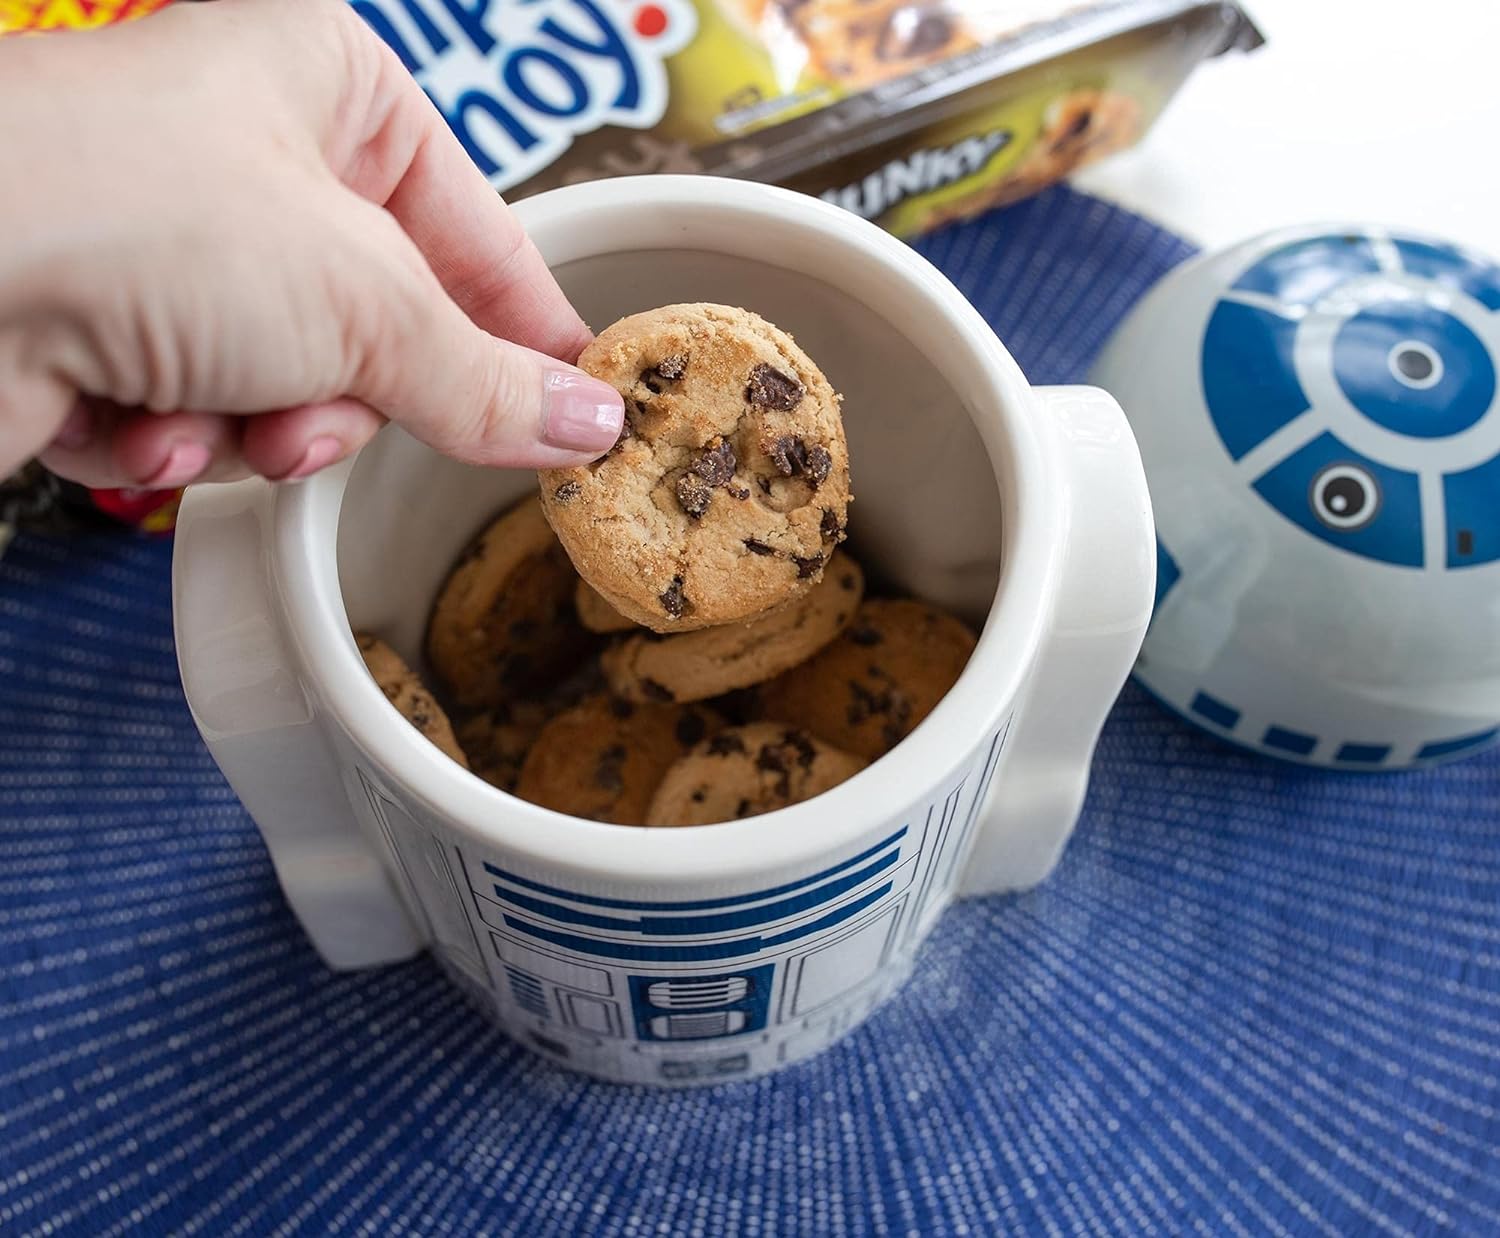 Star Wars R2D2 Ceramic Cookie Jar